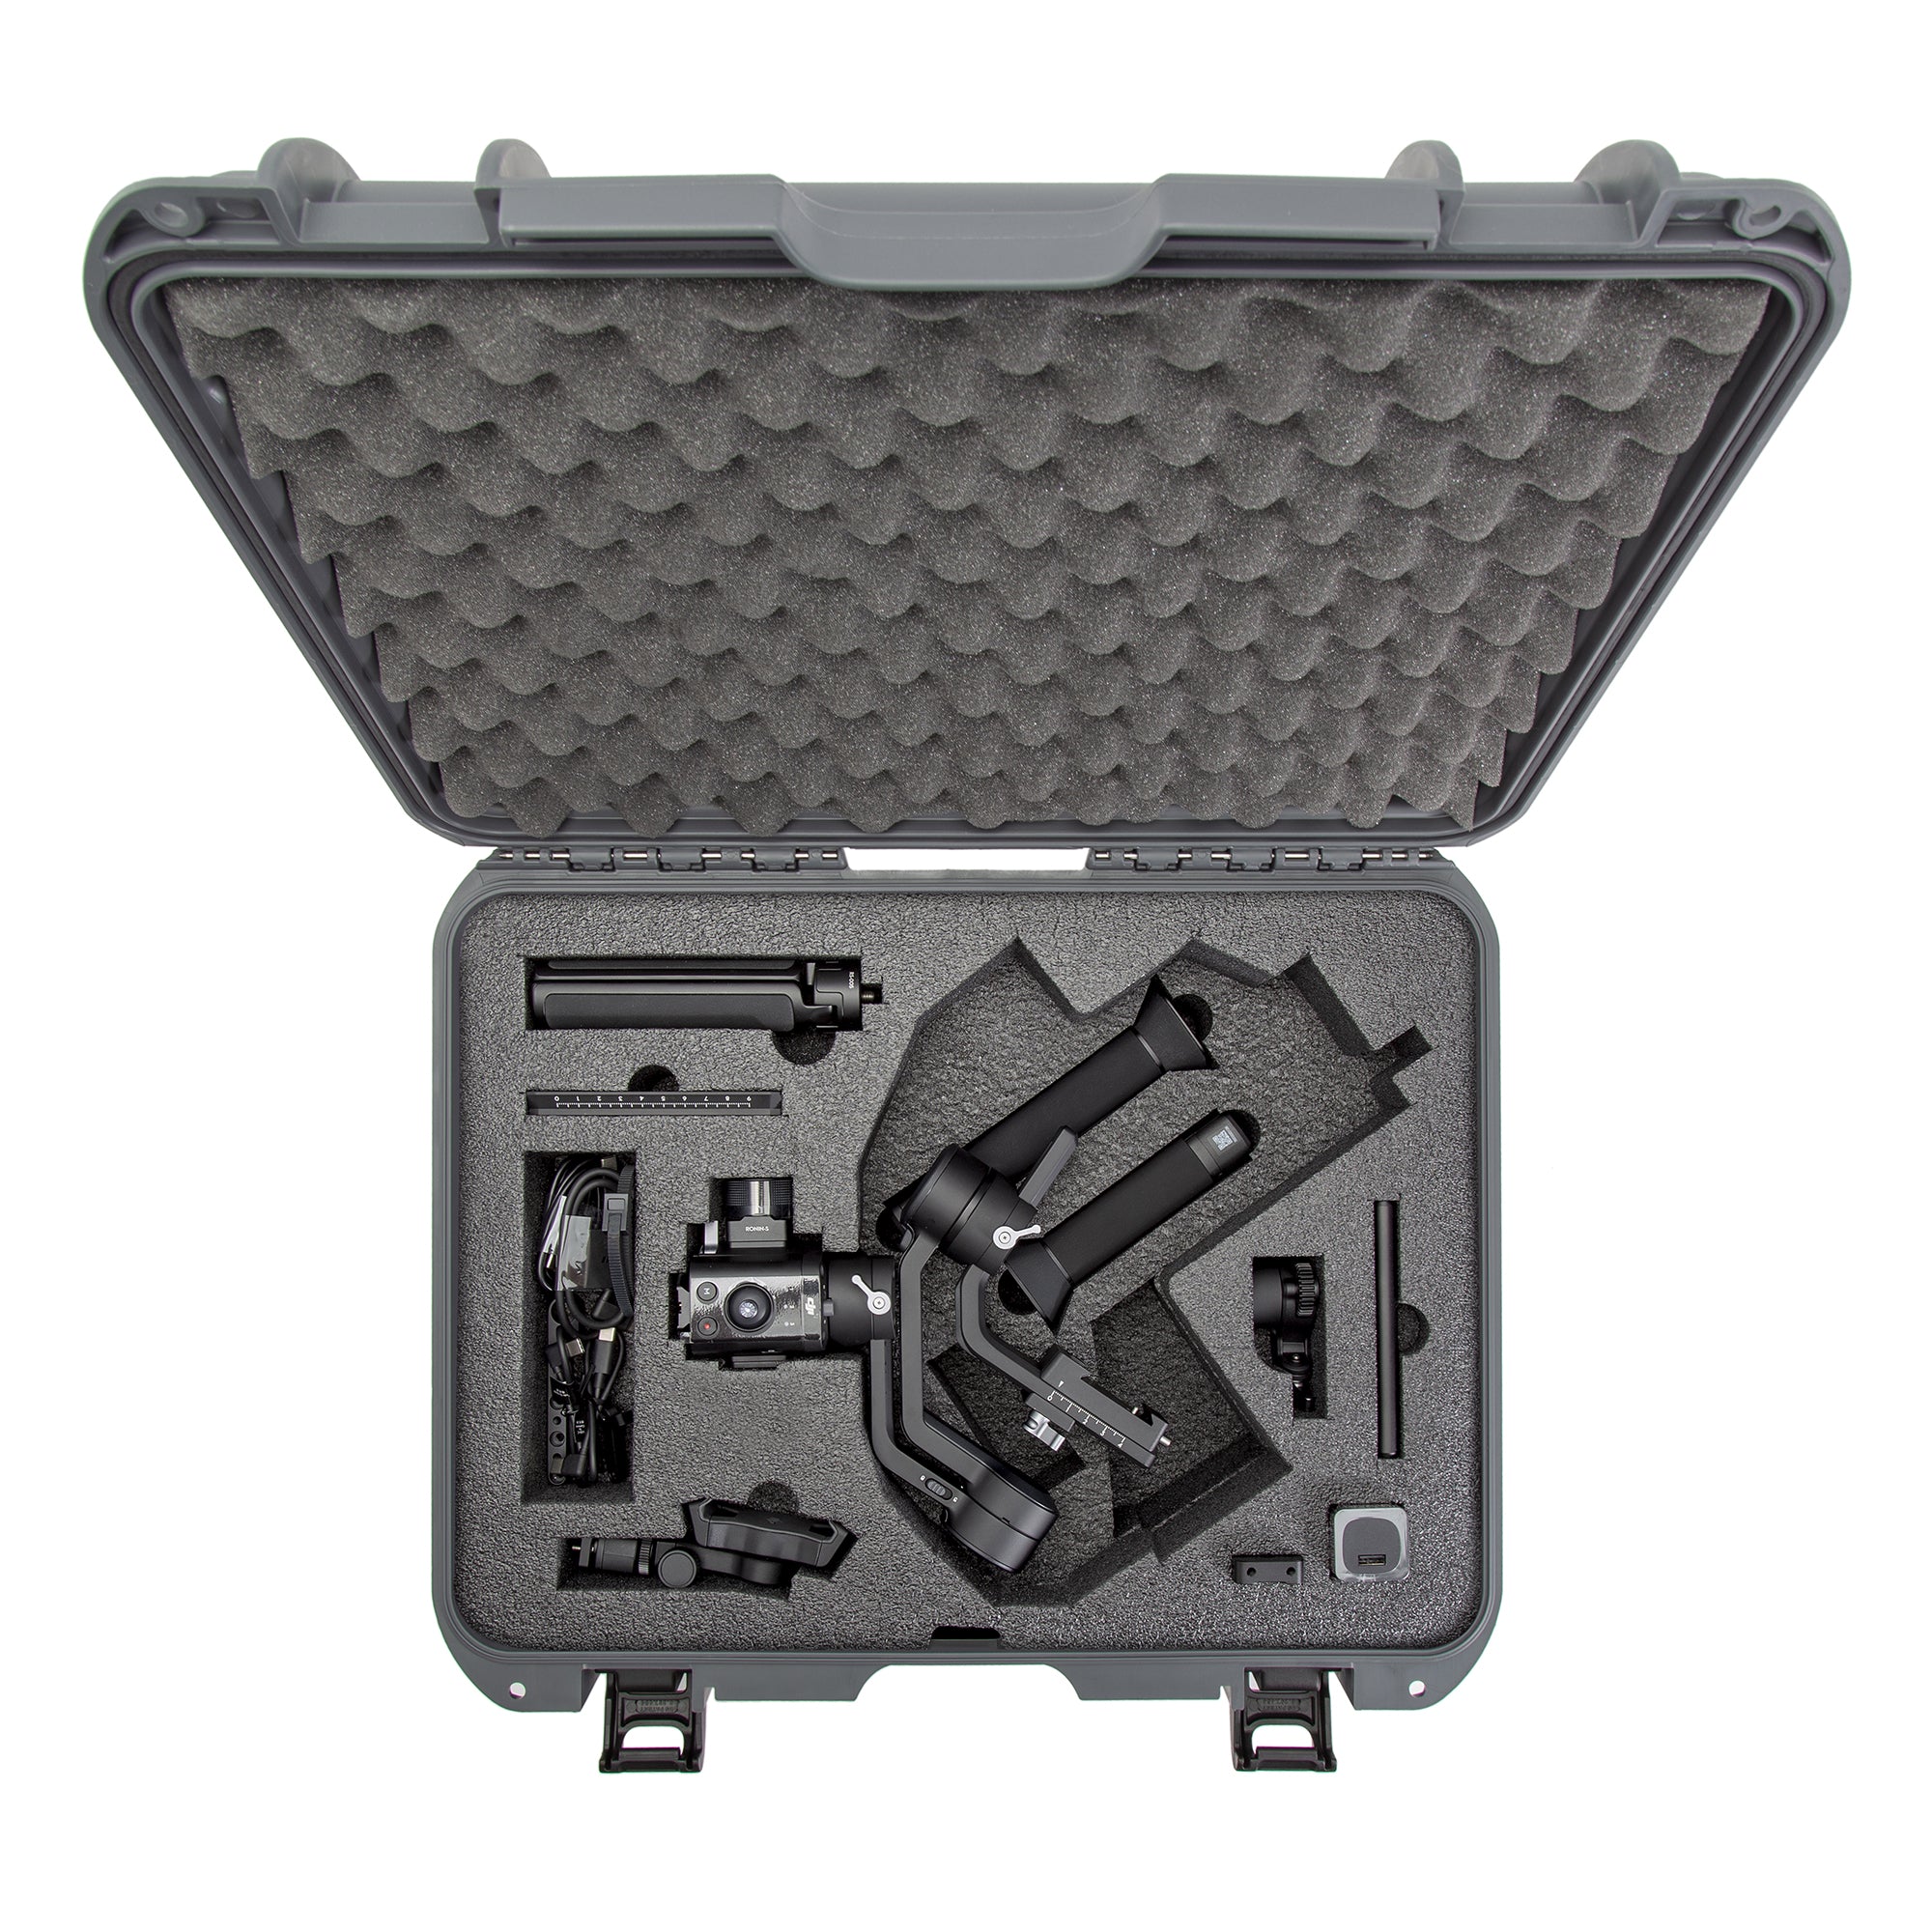 Nanuk 930 Waterproof Hard Case with Custom Foam Insert for DJI Ronin-SC - Graphite